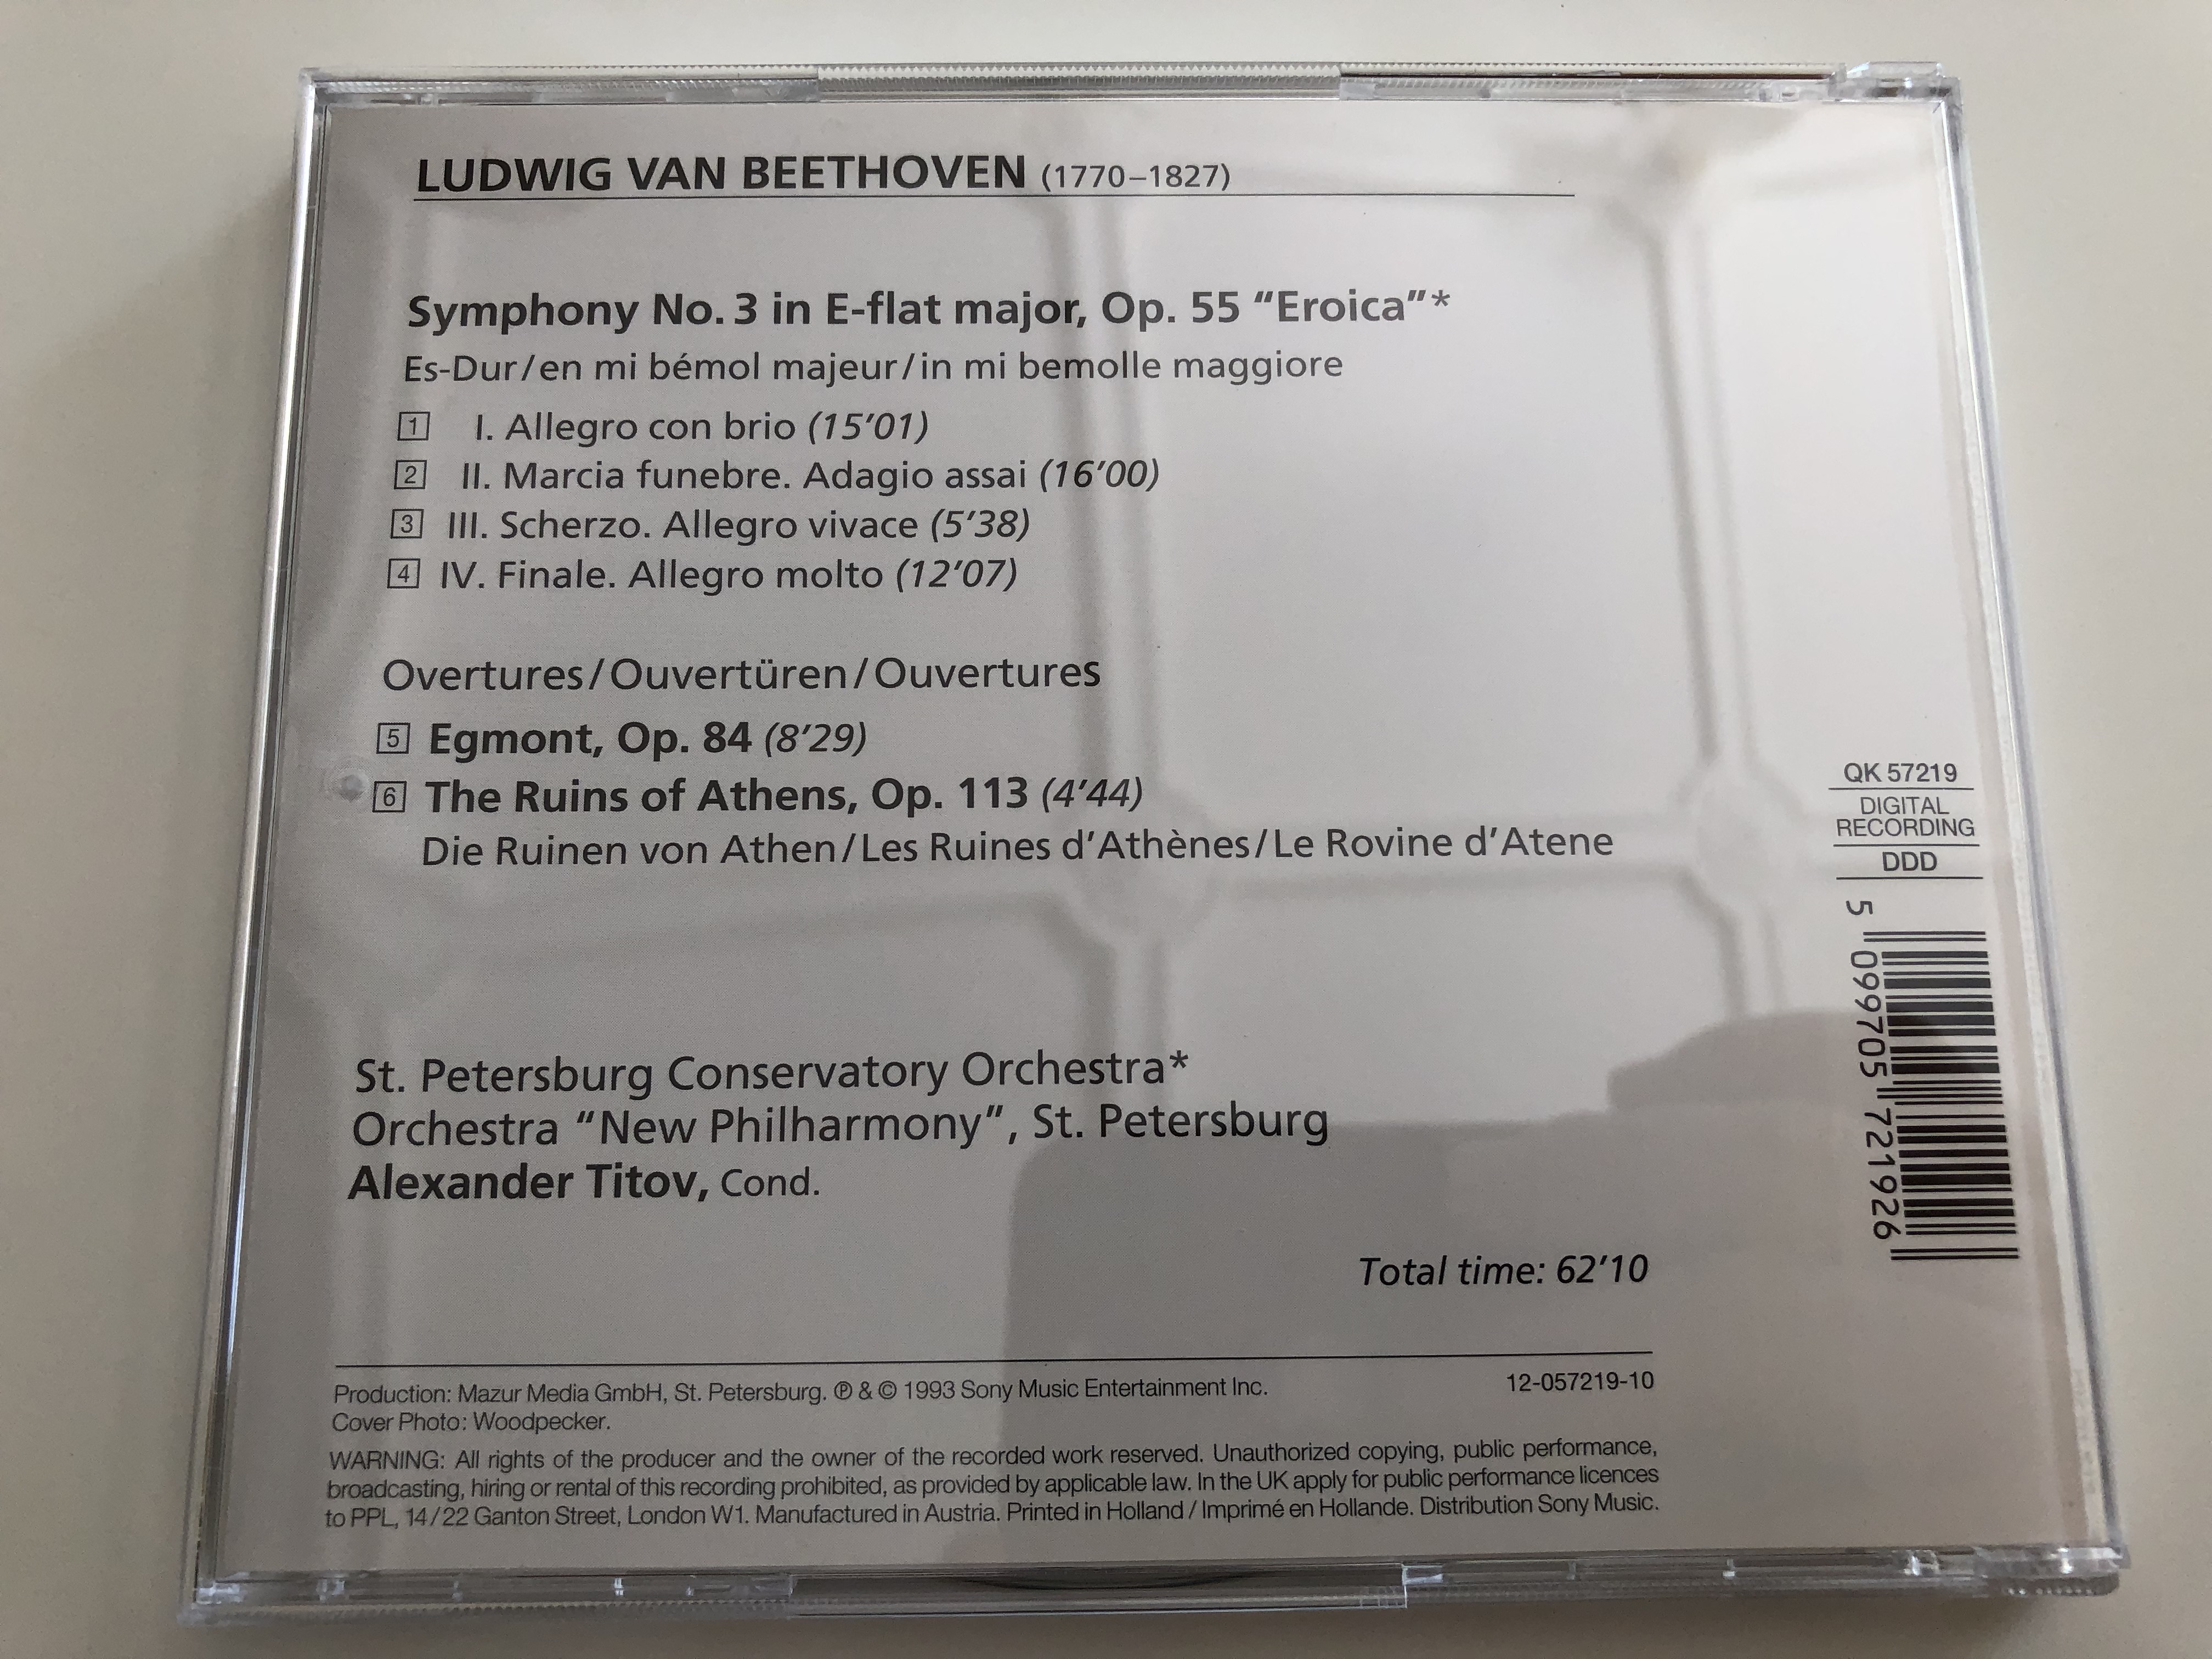 beethoven-symphonie-nr.-3-eroica-ouvert-ren-egmont-die-ruinen-von-athen-st.-petersburg-conservatory-orchestra-conducted-by-alexander-titov-new-philharmoy-orchestra-st.-petersburg-audio-cd-1993-qk-57219-5-.jpg